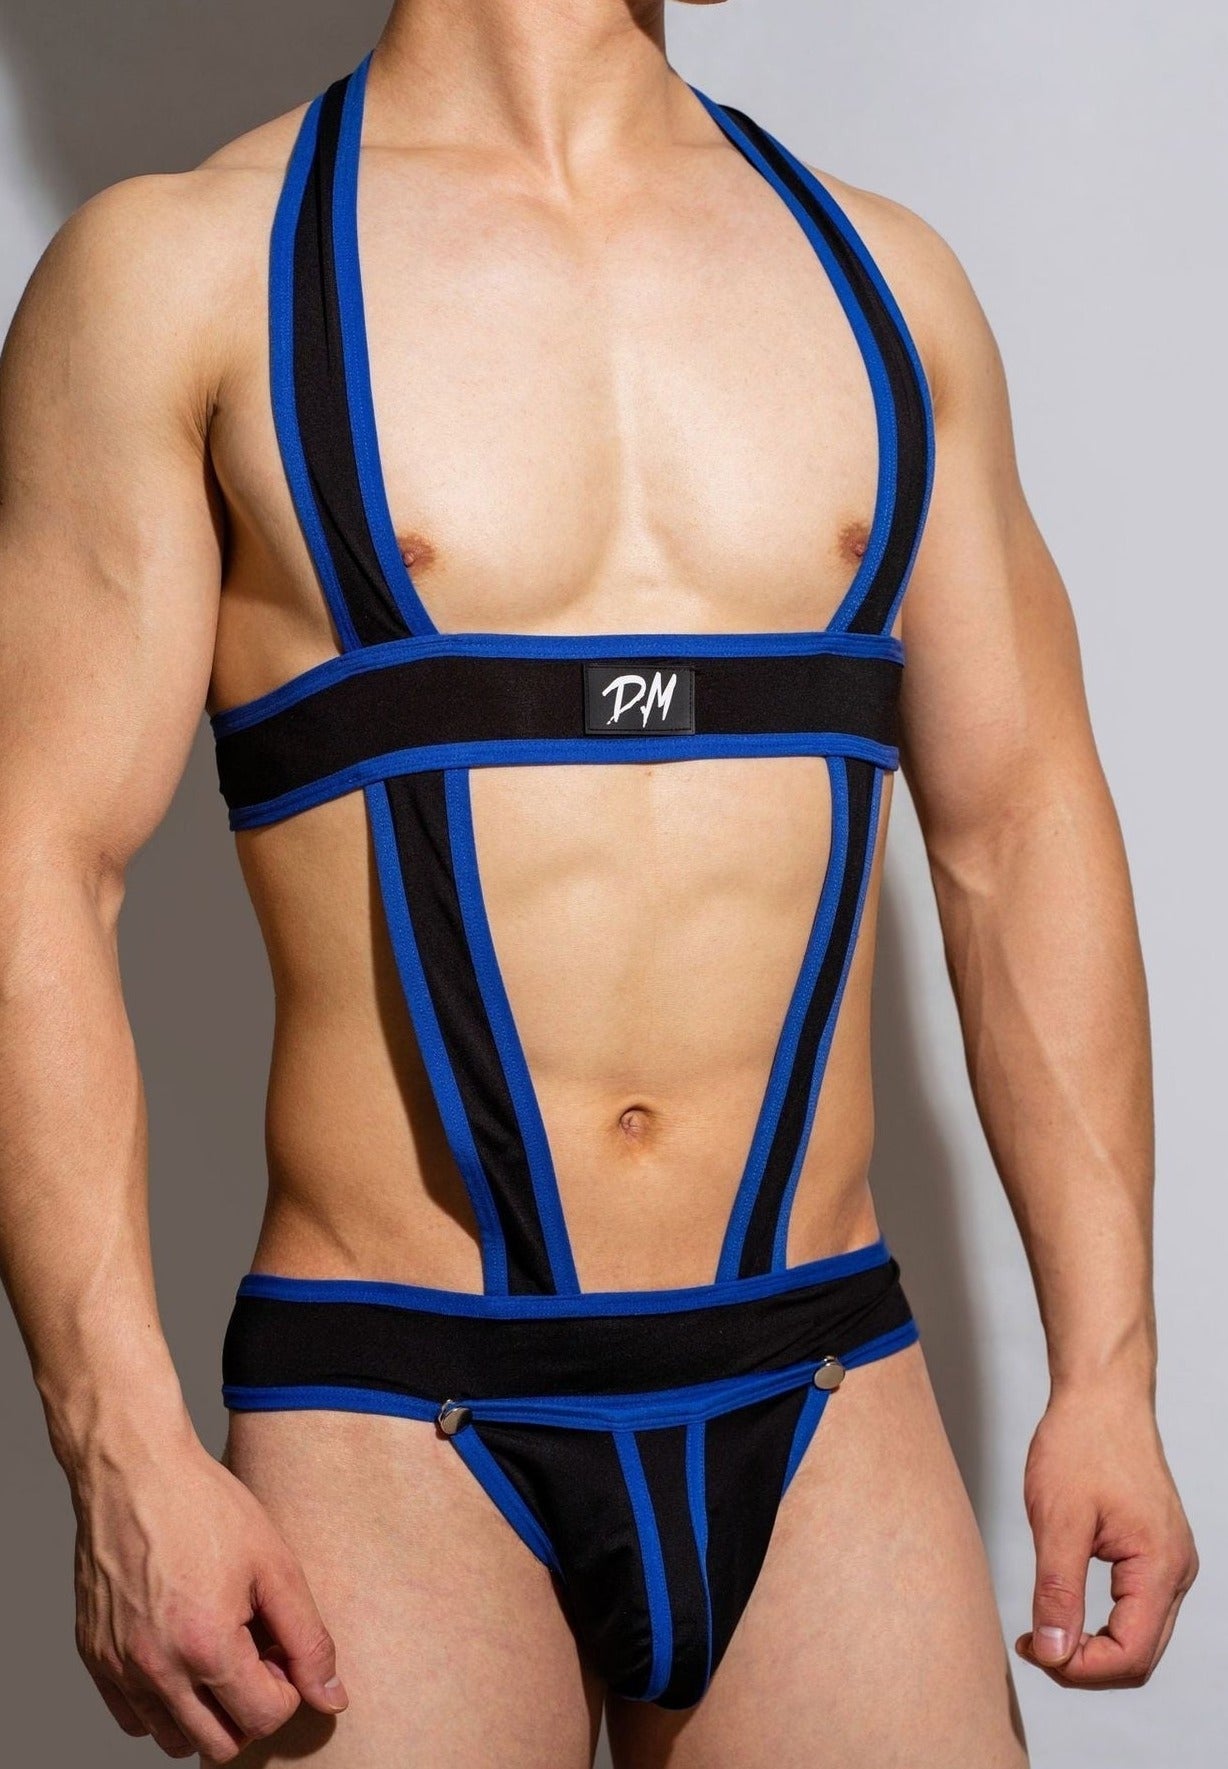 hot gay man in blue DM Release Jockstrap Harness | Harness for Men- pridevoyageshop.com - gay men’s harness, lingerie and fetish wear